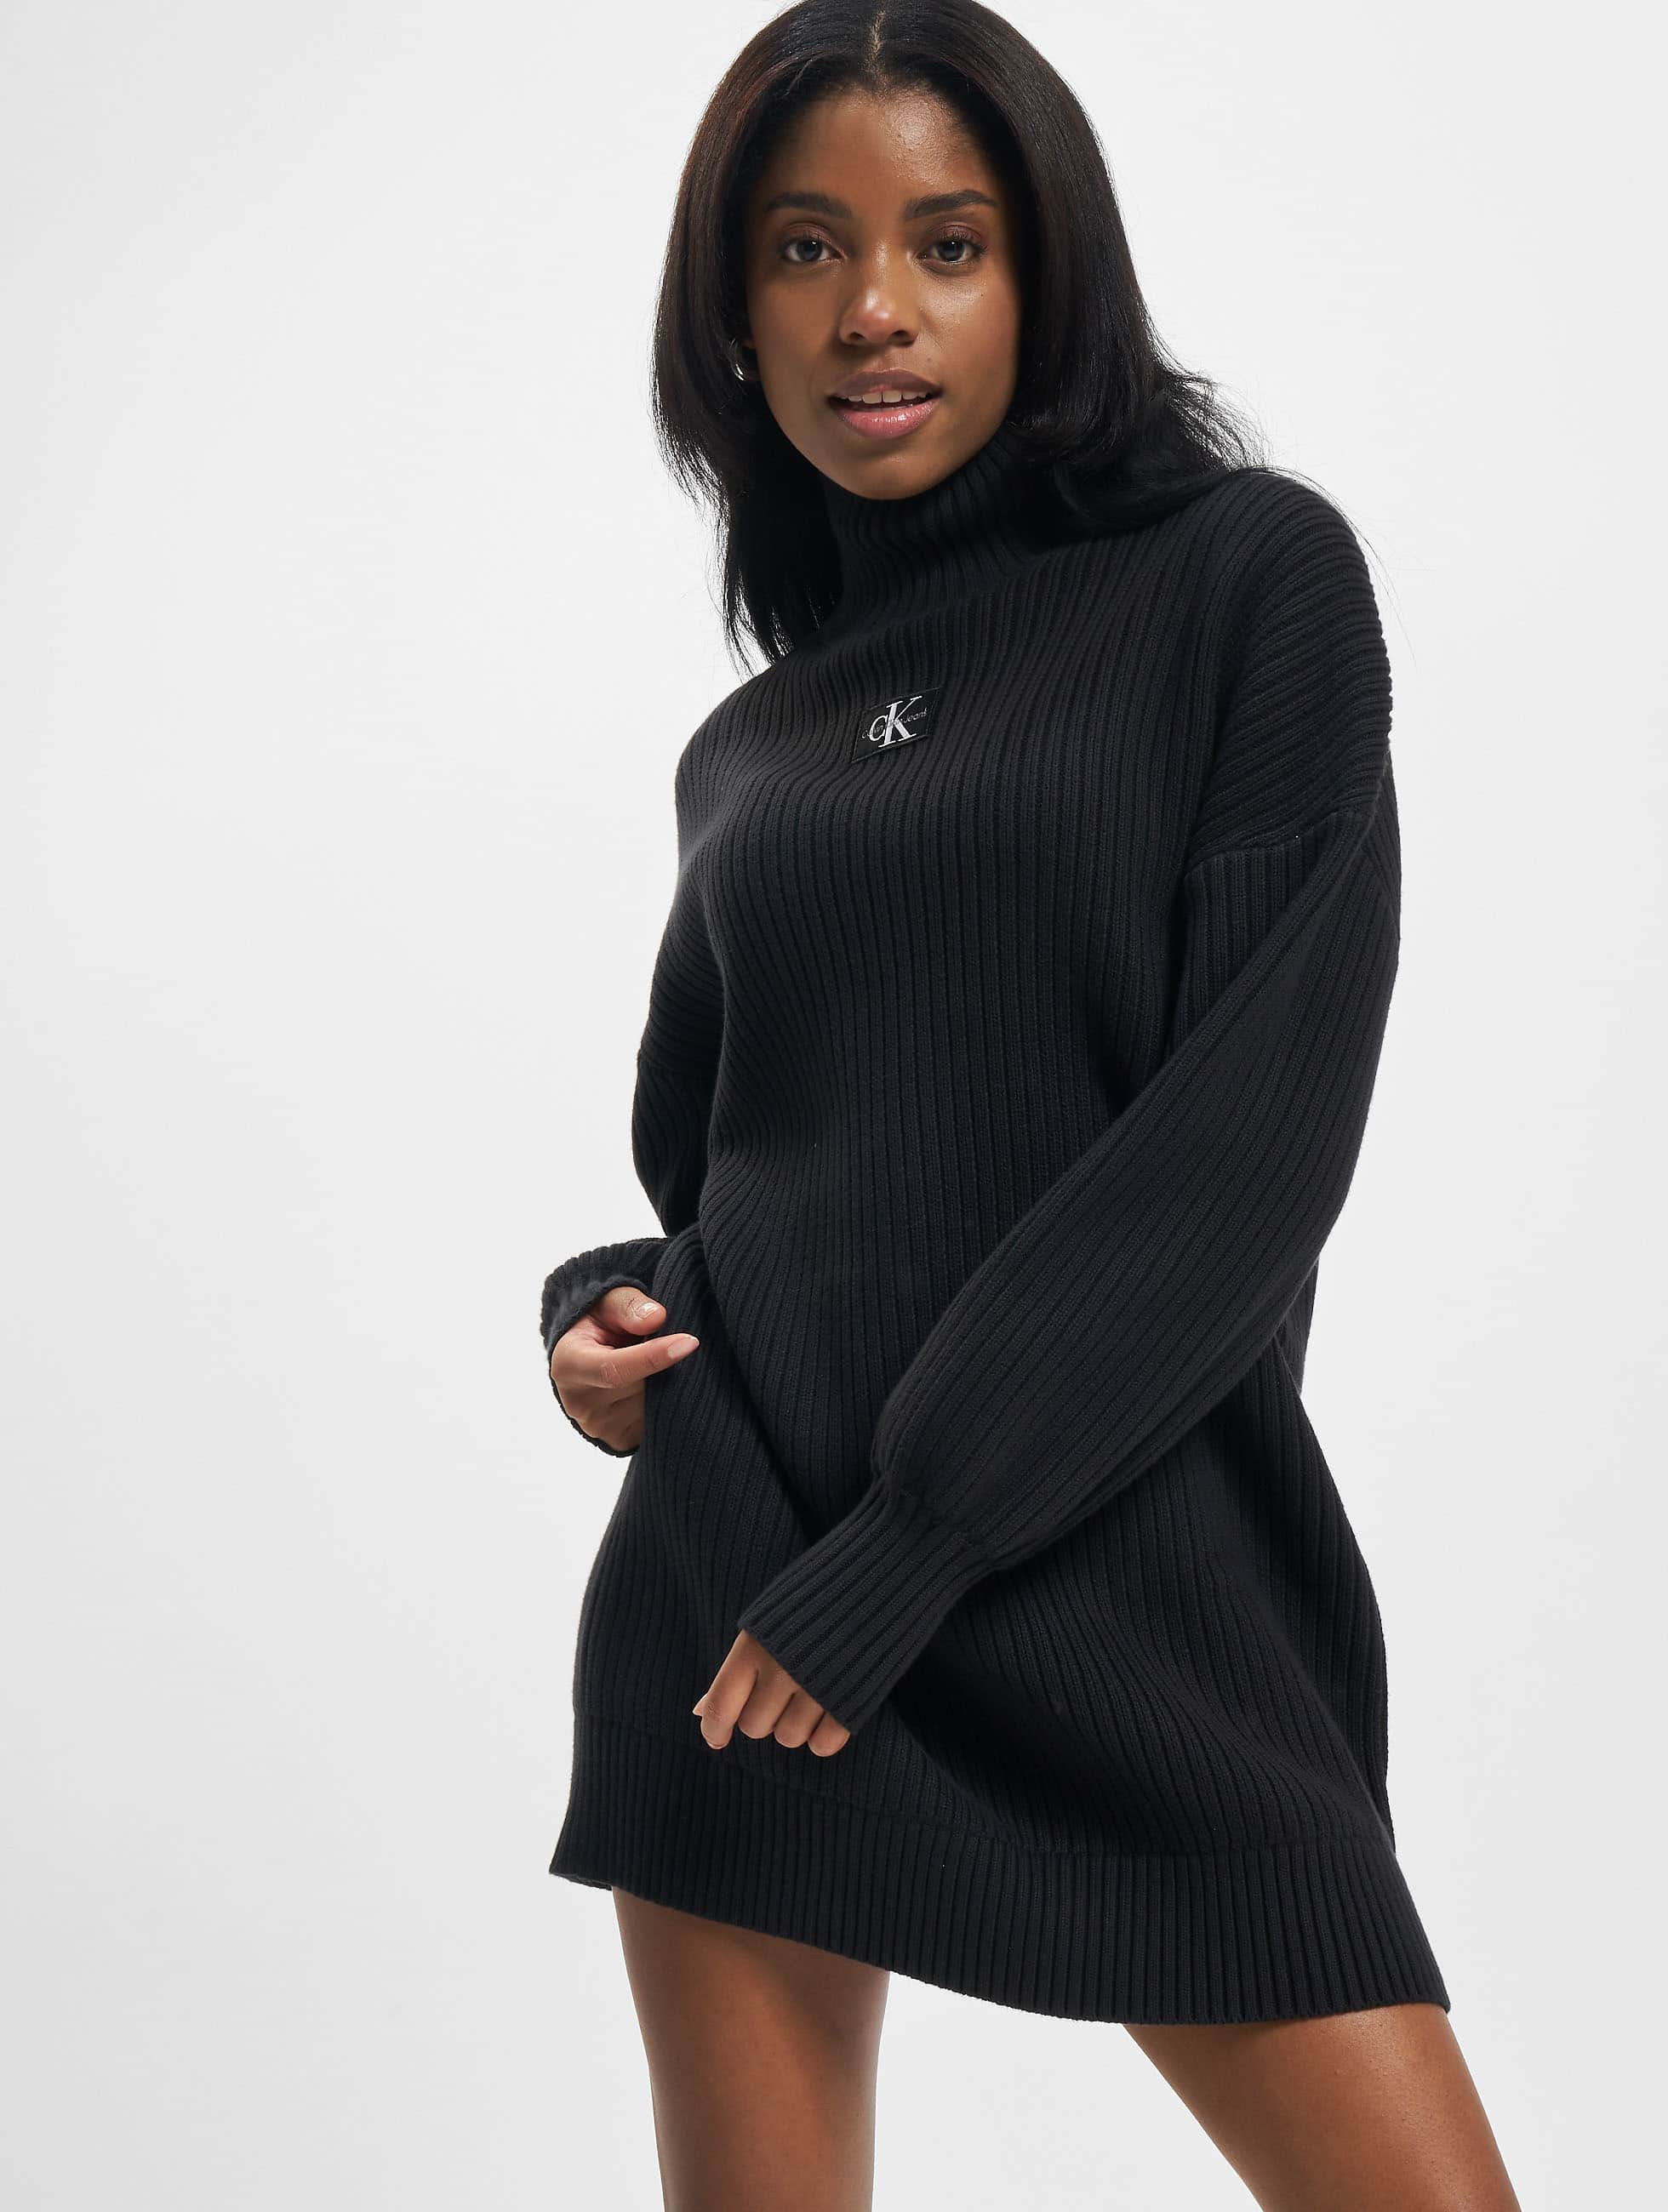 Calvin Klein / Dress Badge Loose Sweater in black 971071